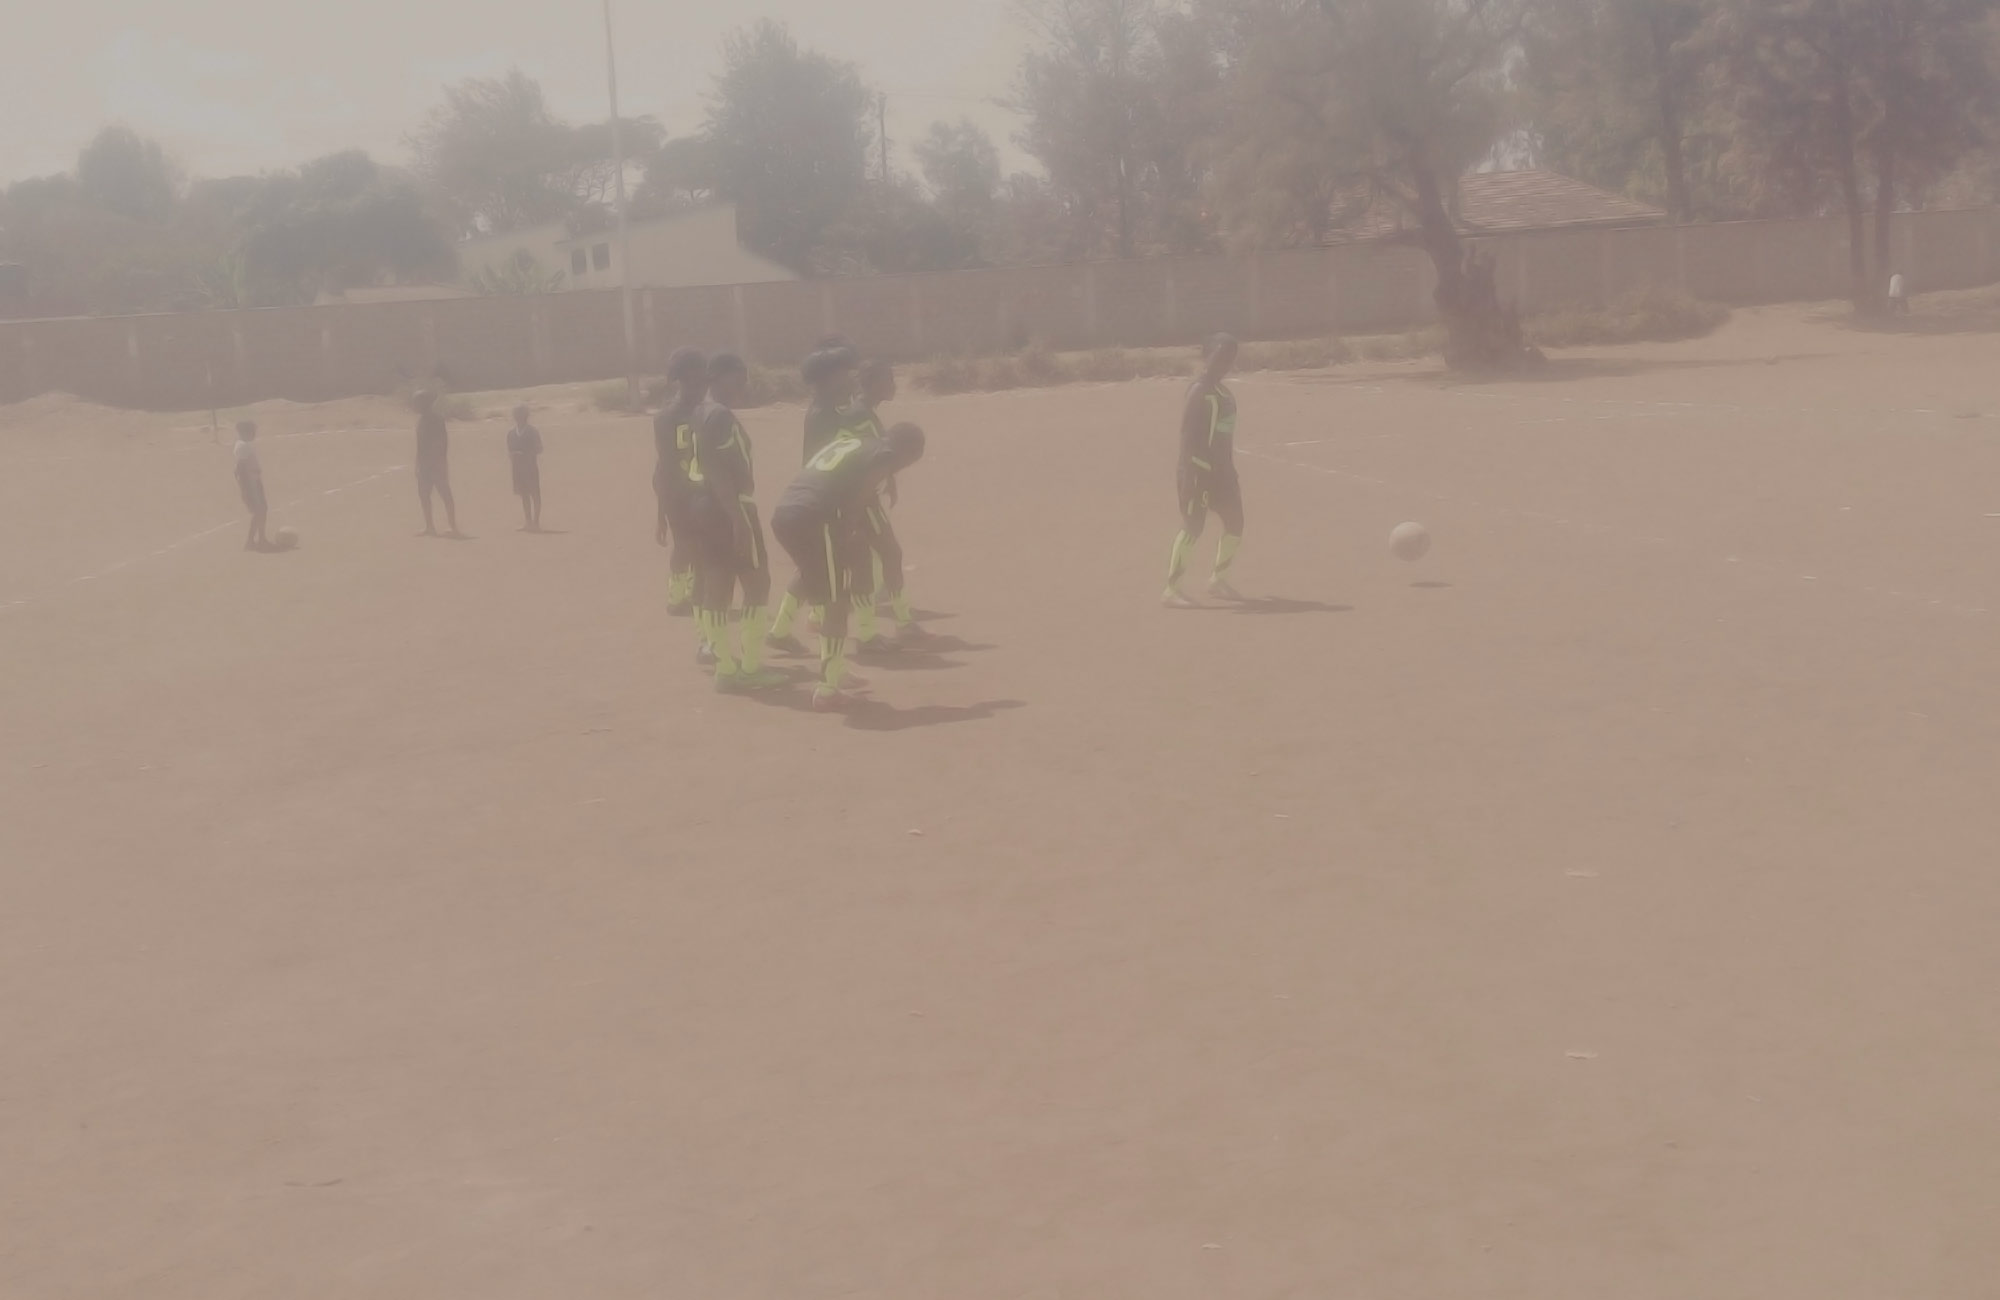 image of girls playing soccer